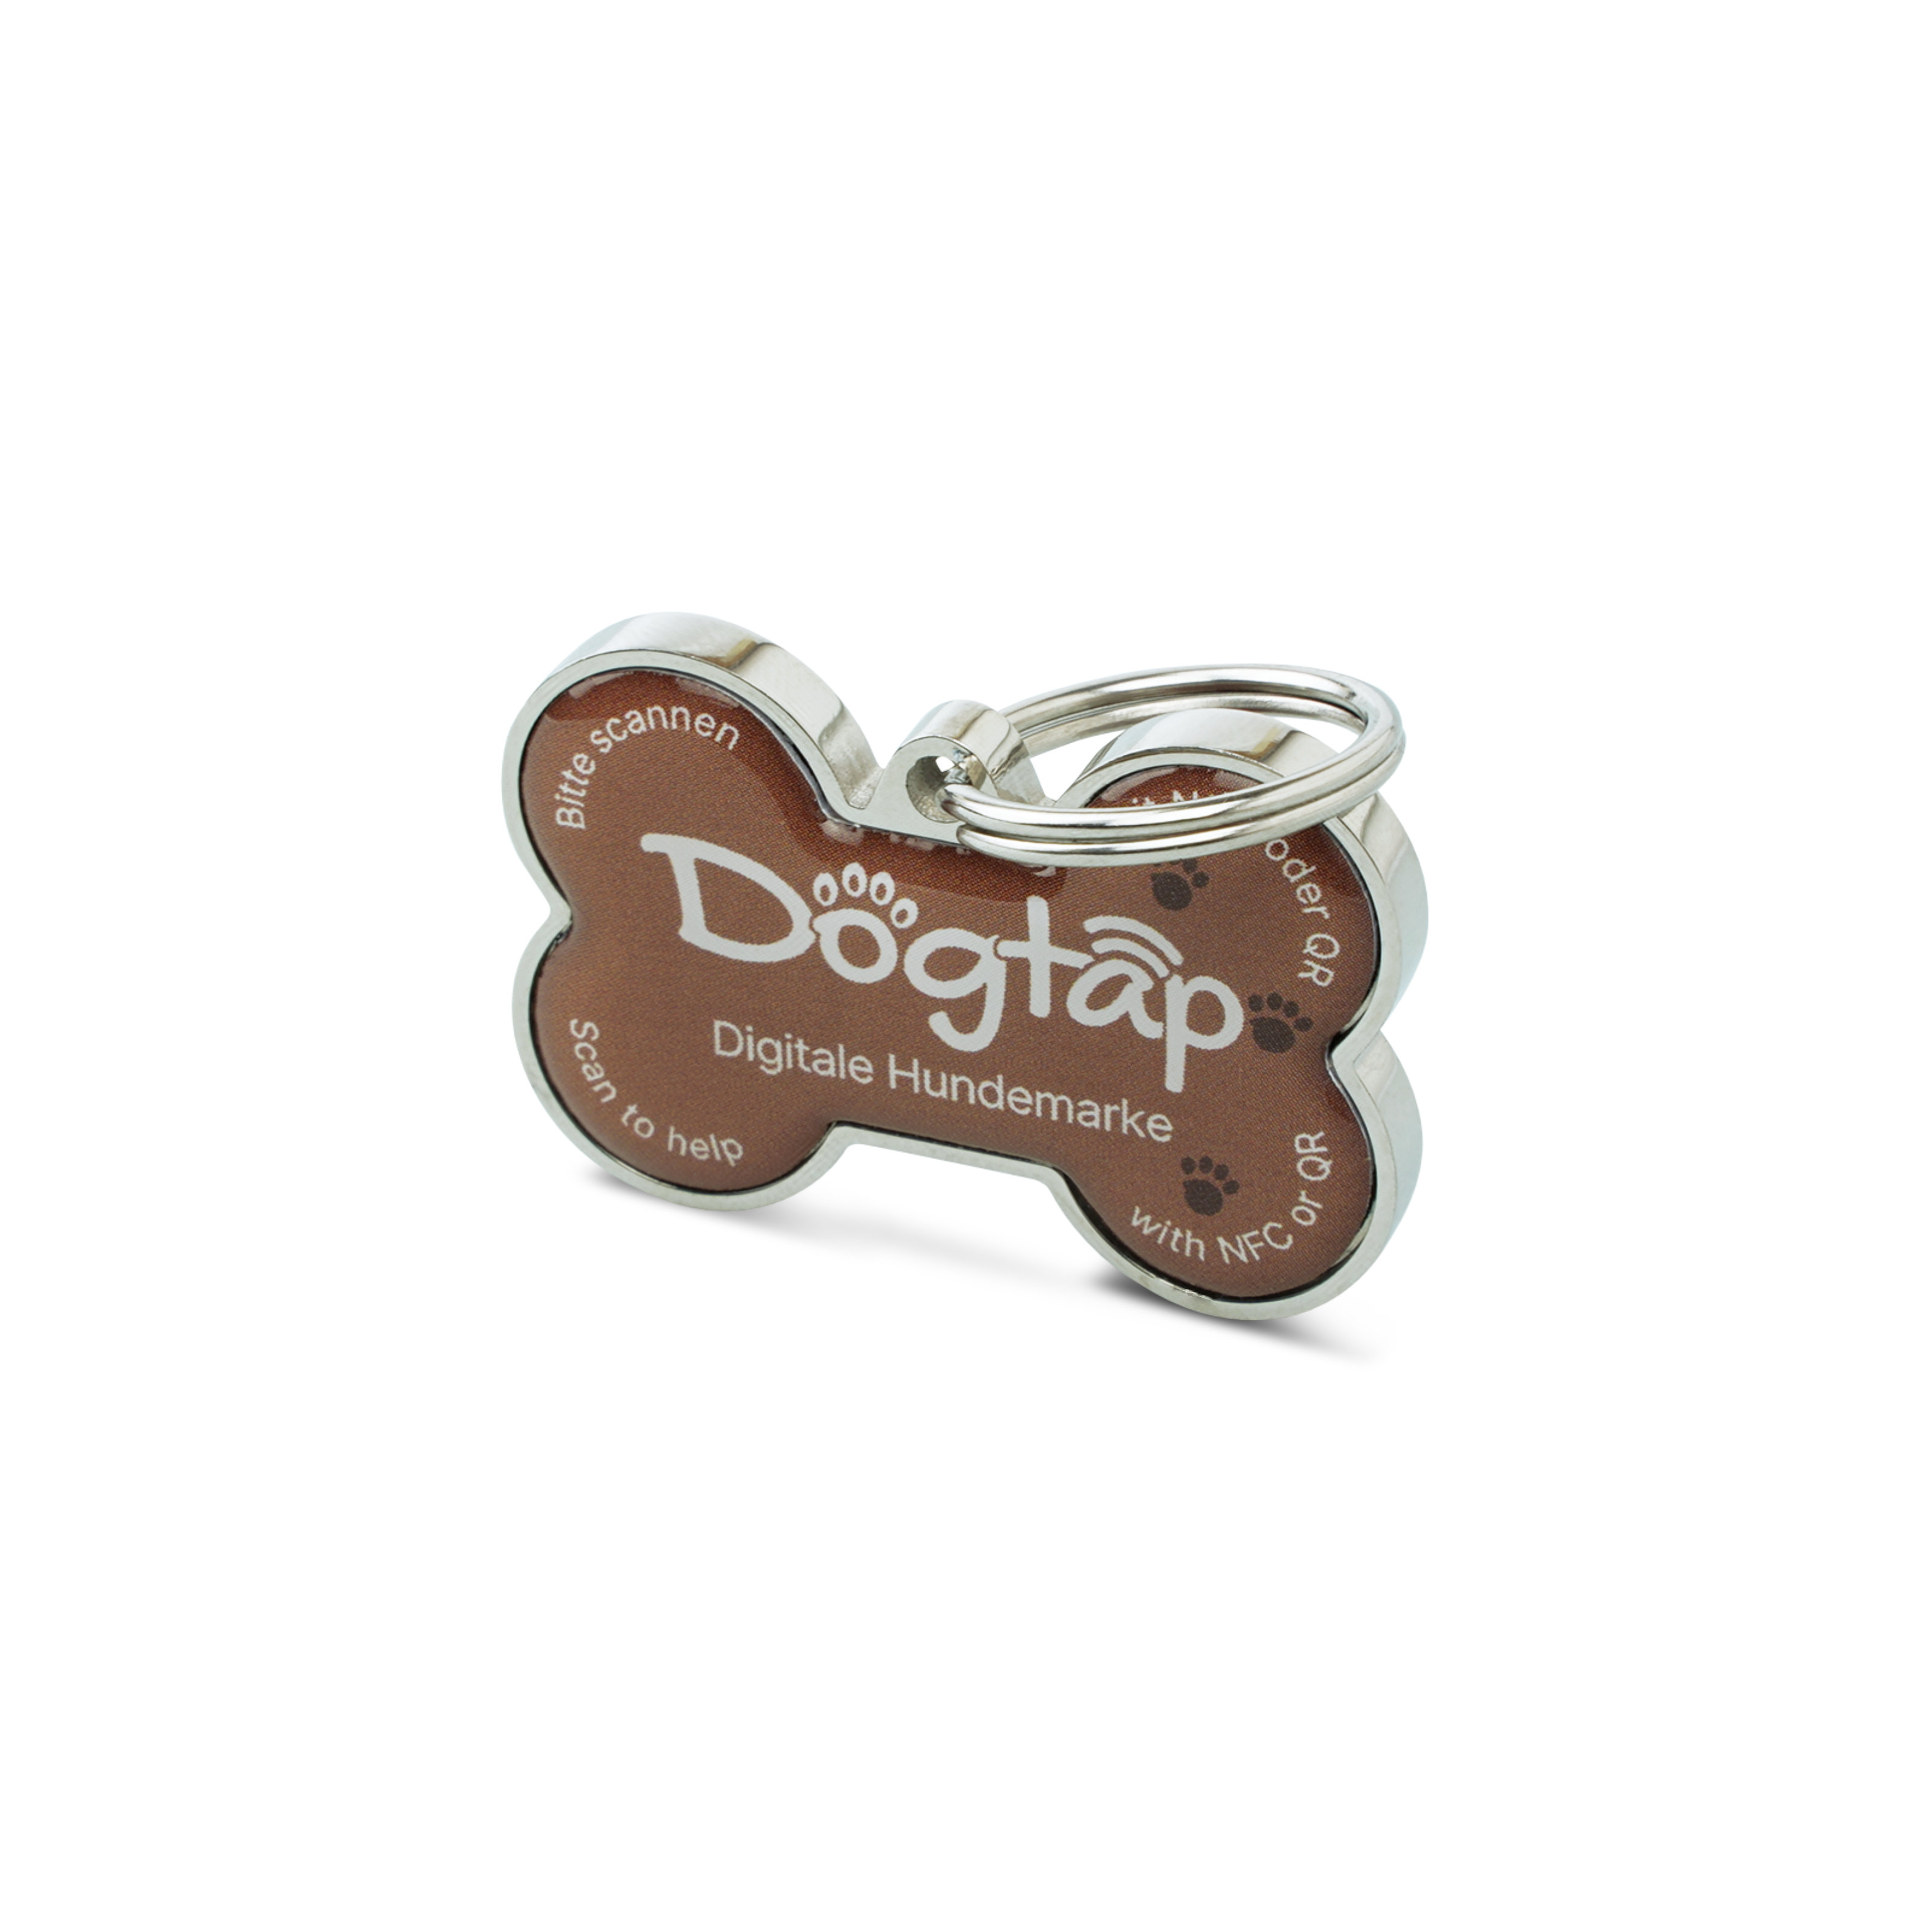 Dogtap Solid - Digitale Hundemarke - PVC / Metall - 41,6 x 28,5 x 4,6 mm - braun